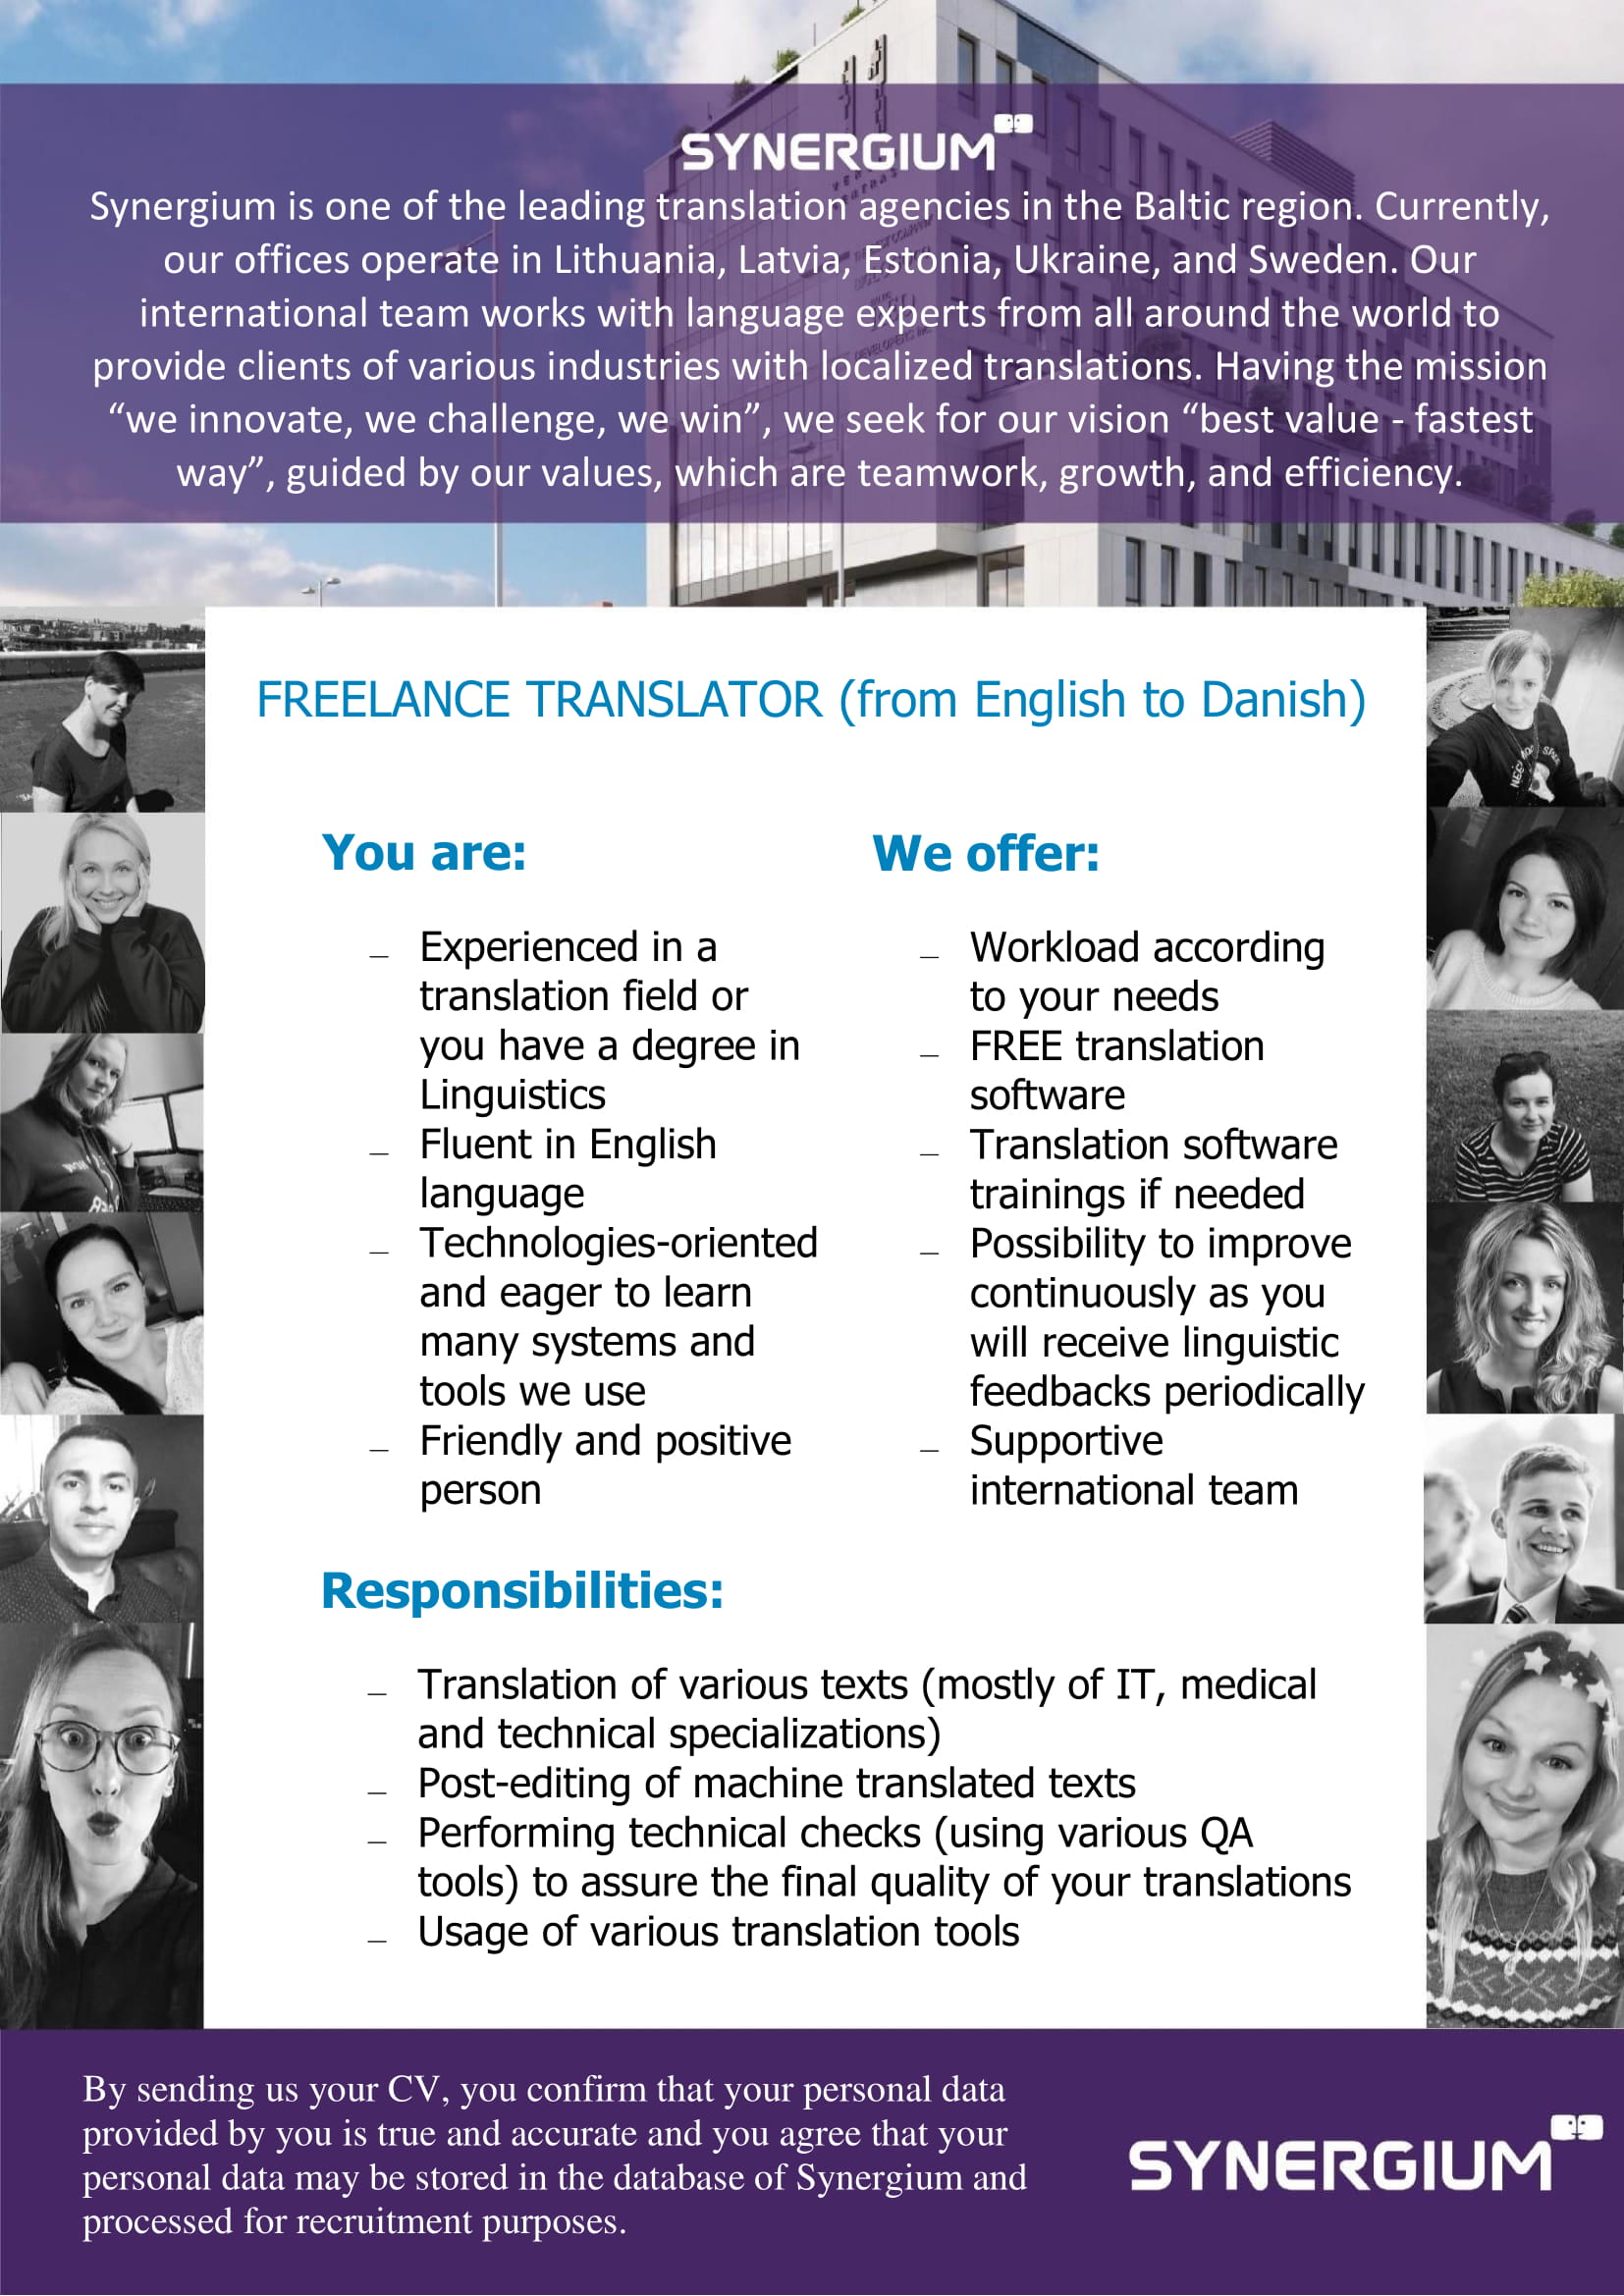 Synergium freelance translator from english to danish job advertisement